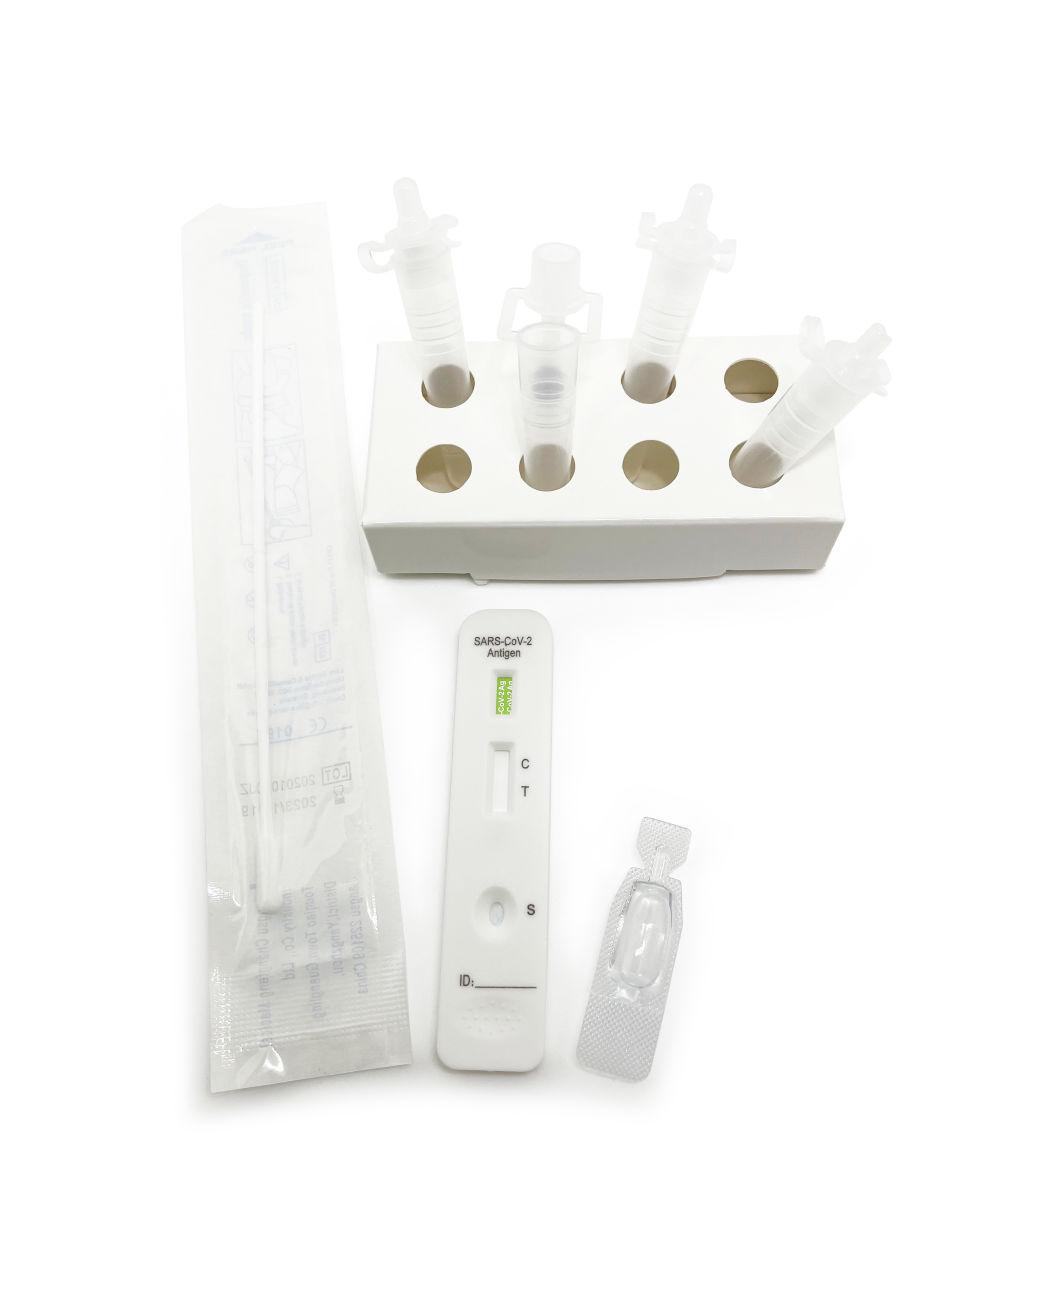 Rapid Antigen Test Kit, Nasal Antigen Test Cassette, Antigen Test